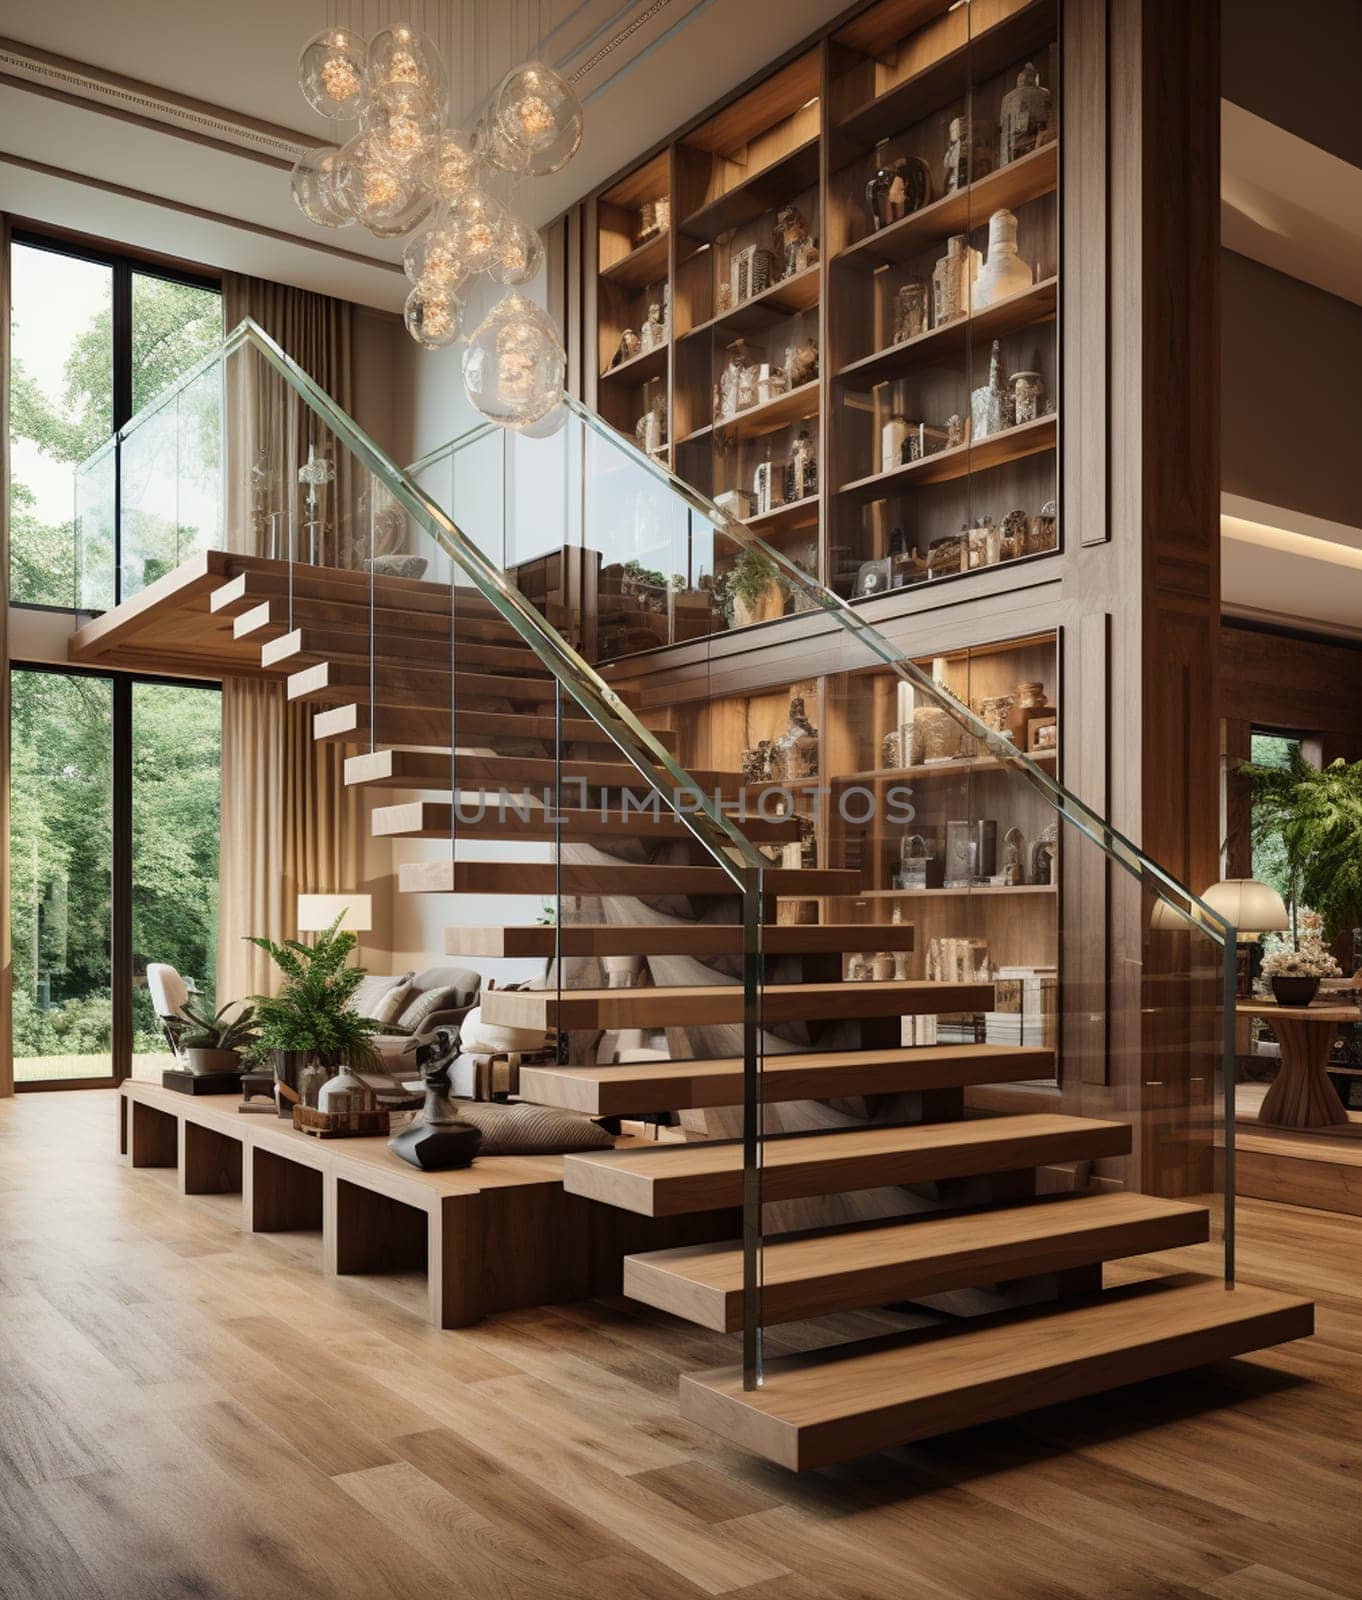 Minimalistic stairs in modern villa interior by Andelov13